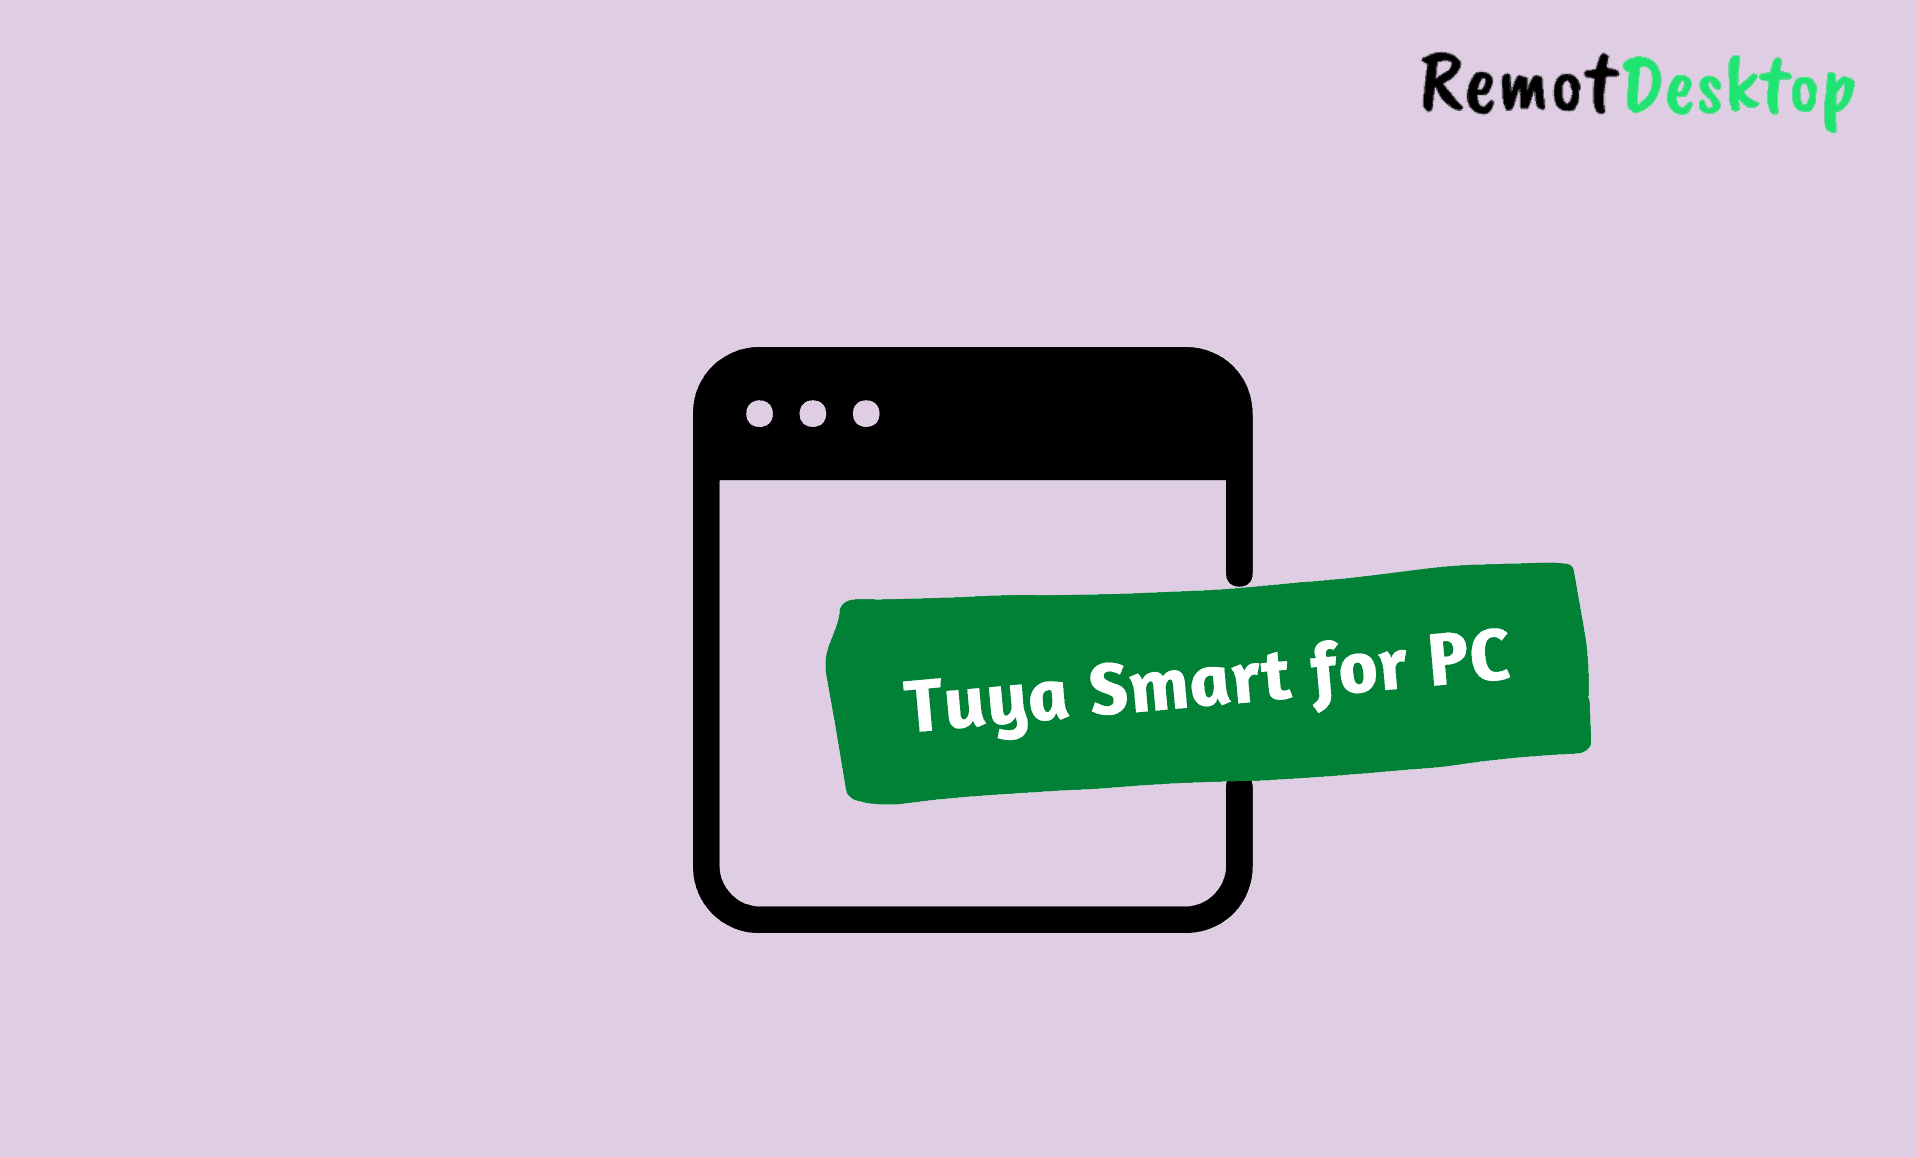 Tuya Smart for PC